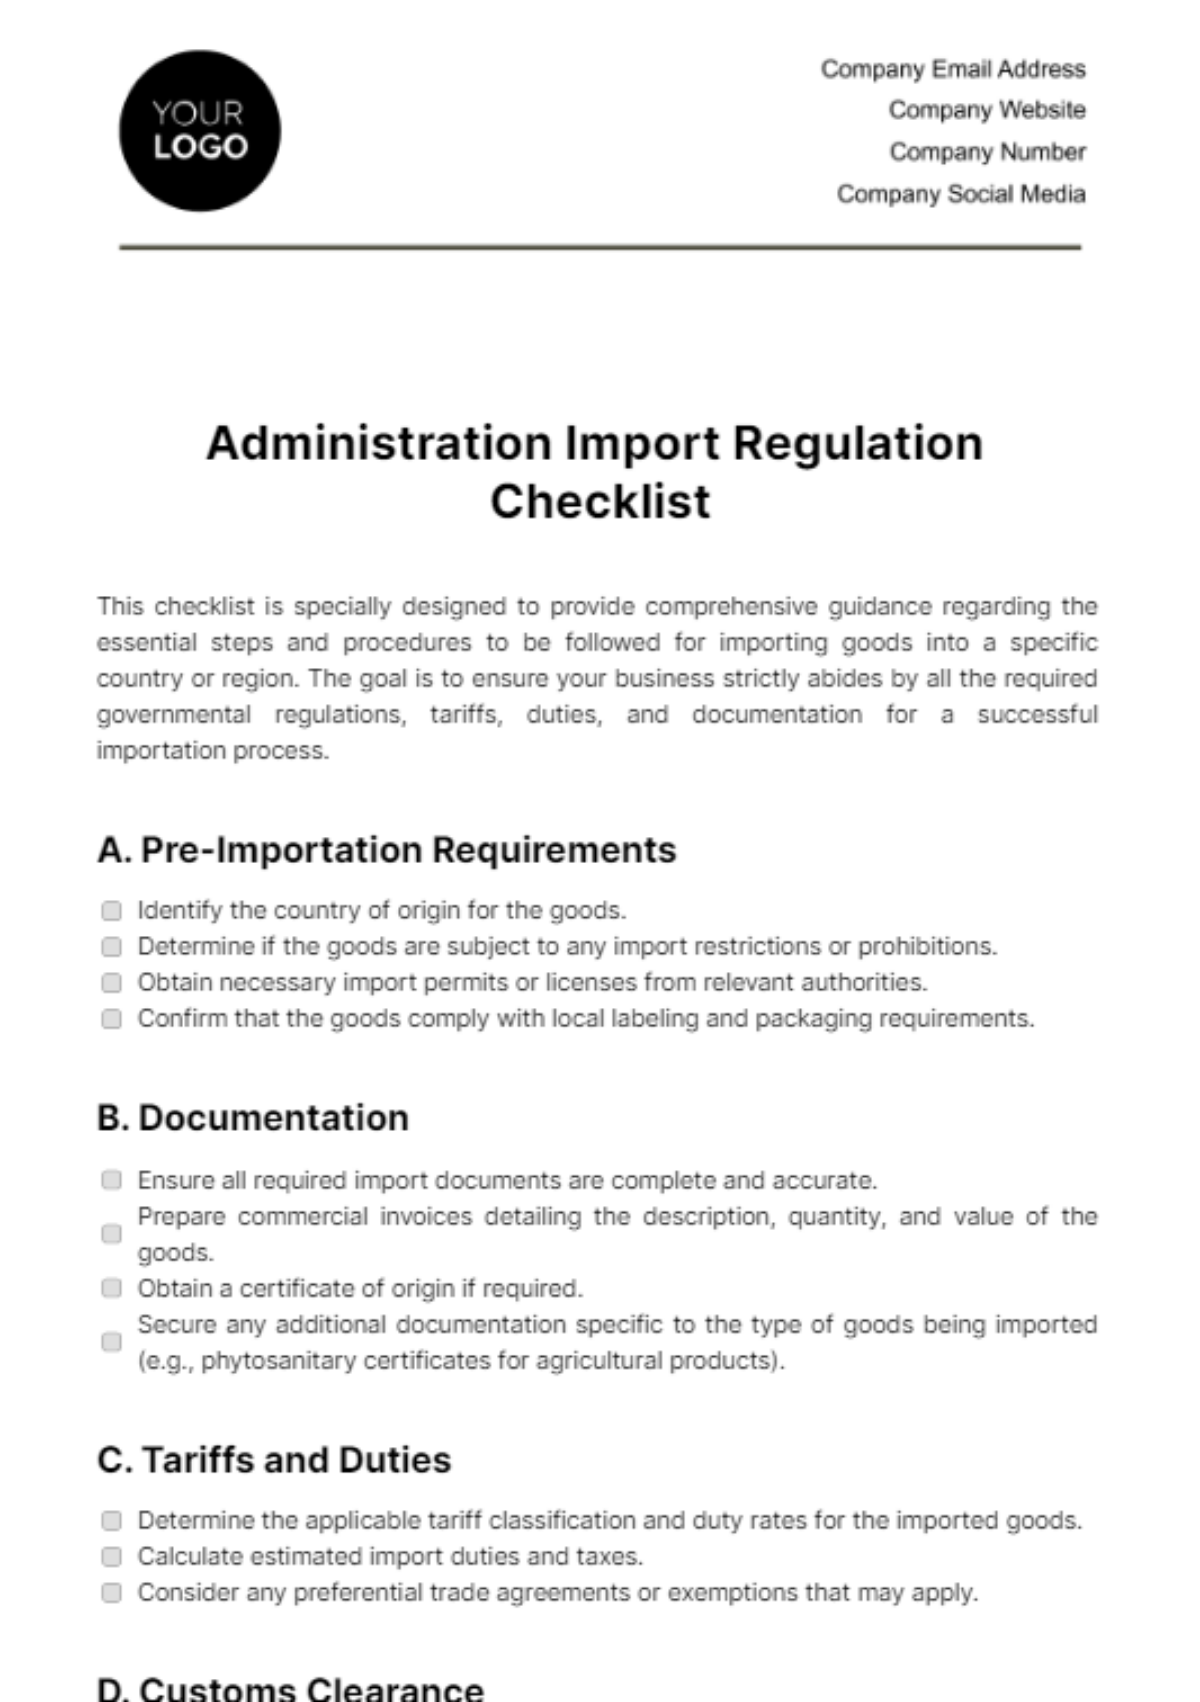 Administration Import Regulation Checklist Template